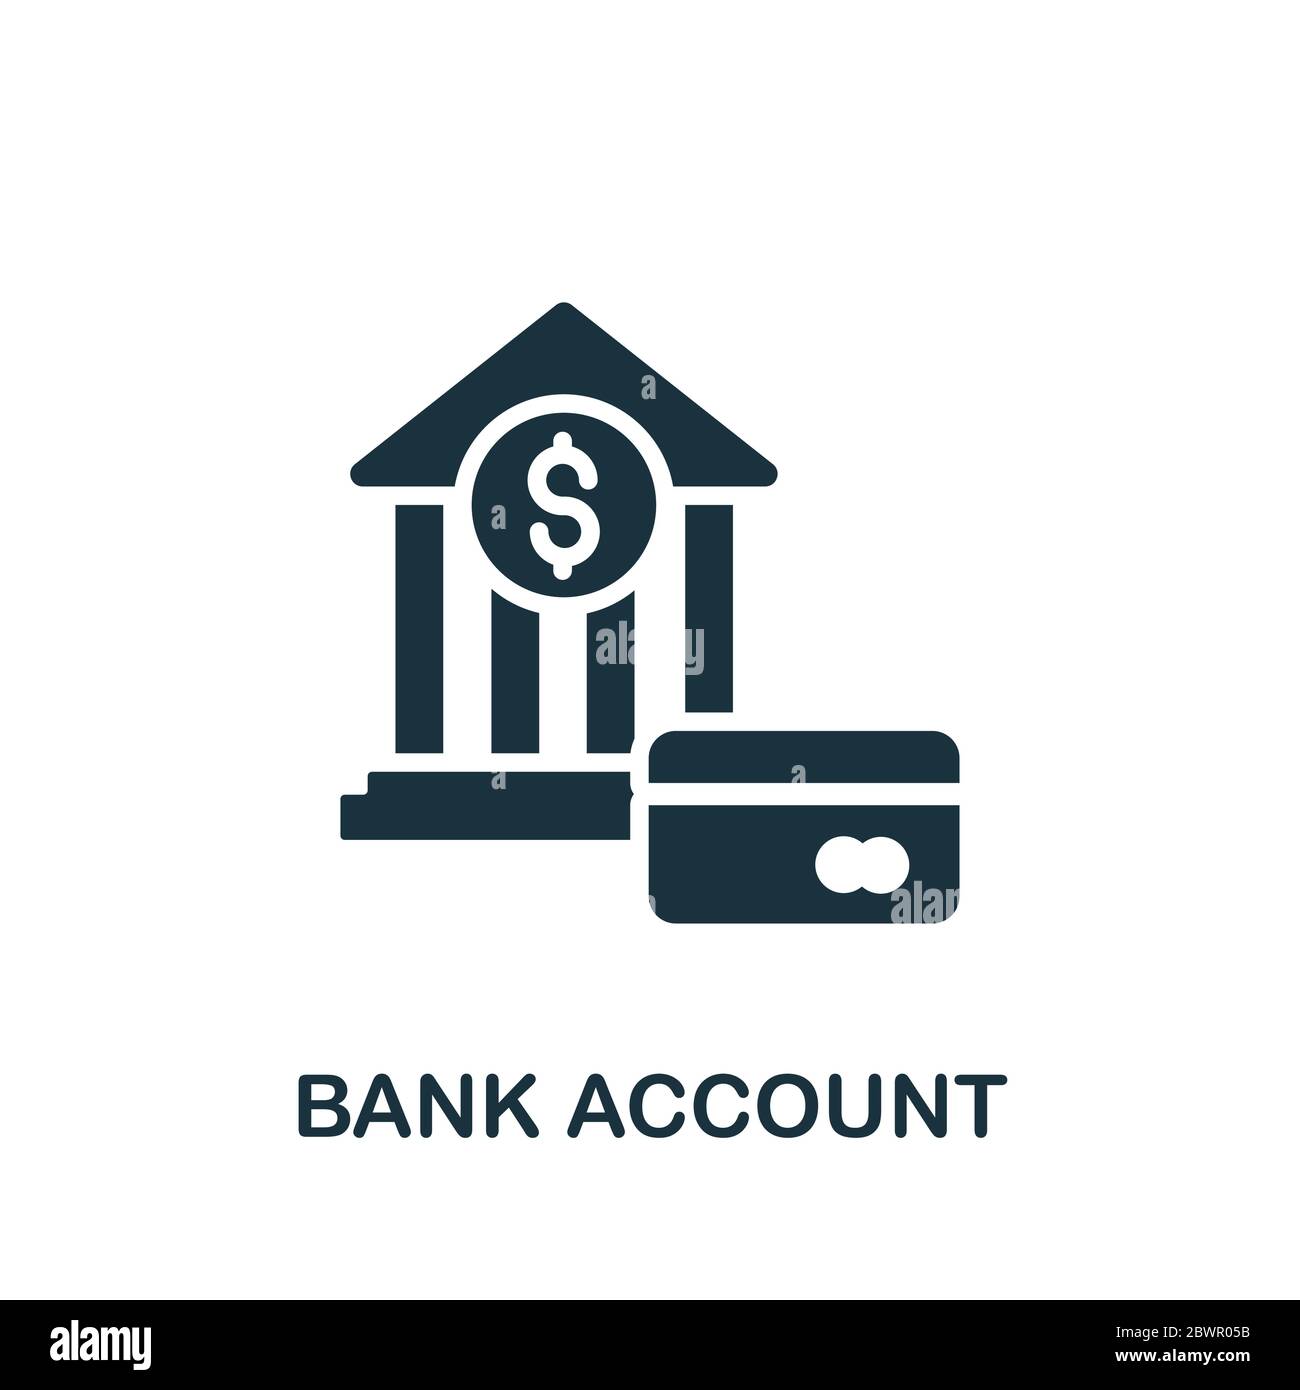 bank account icons